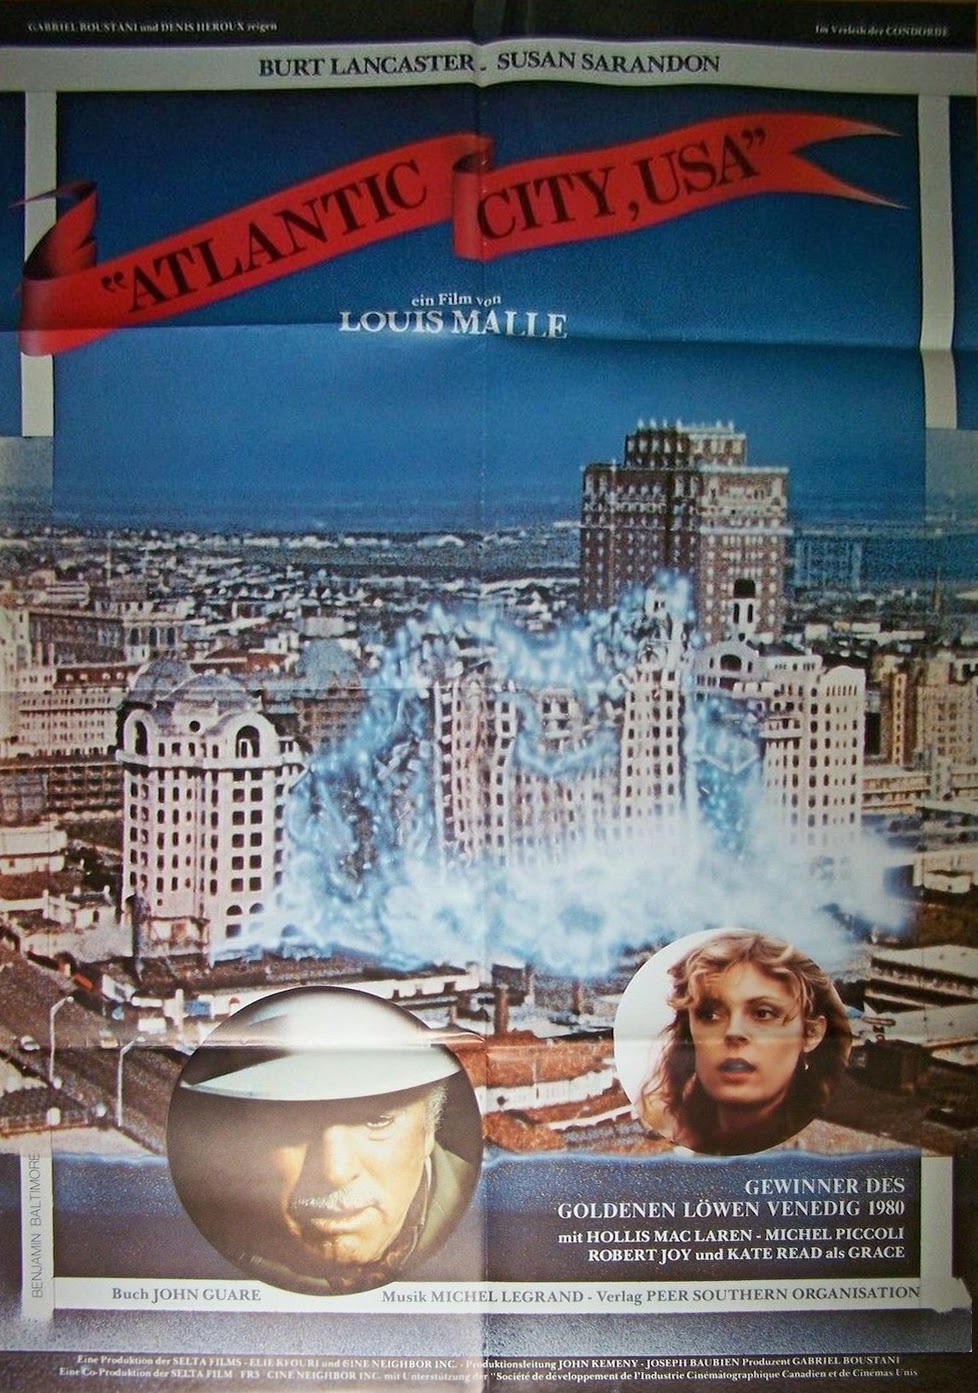 All About Movies - Atlantic City Poster Original Daybill 1980 Burt